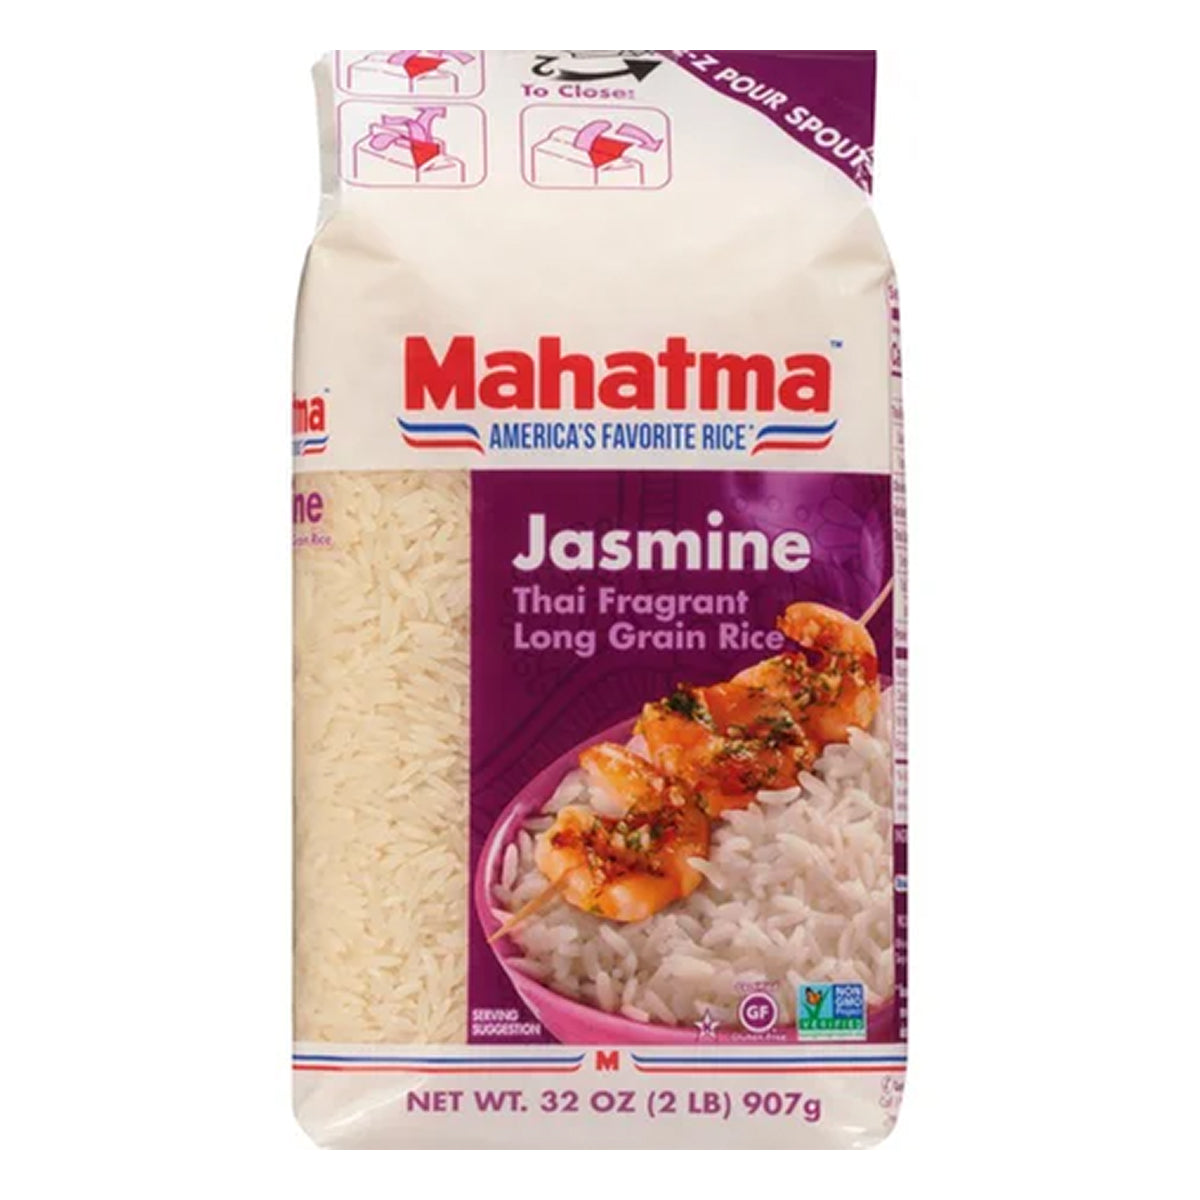 mahatma jasmine long grain thai fragrant rice - 2lb